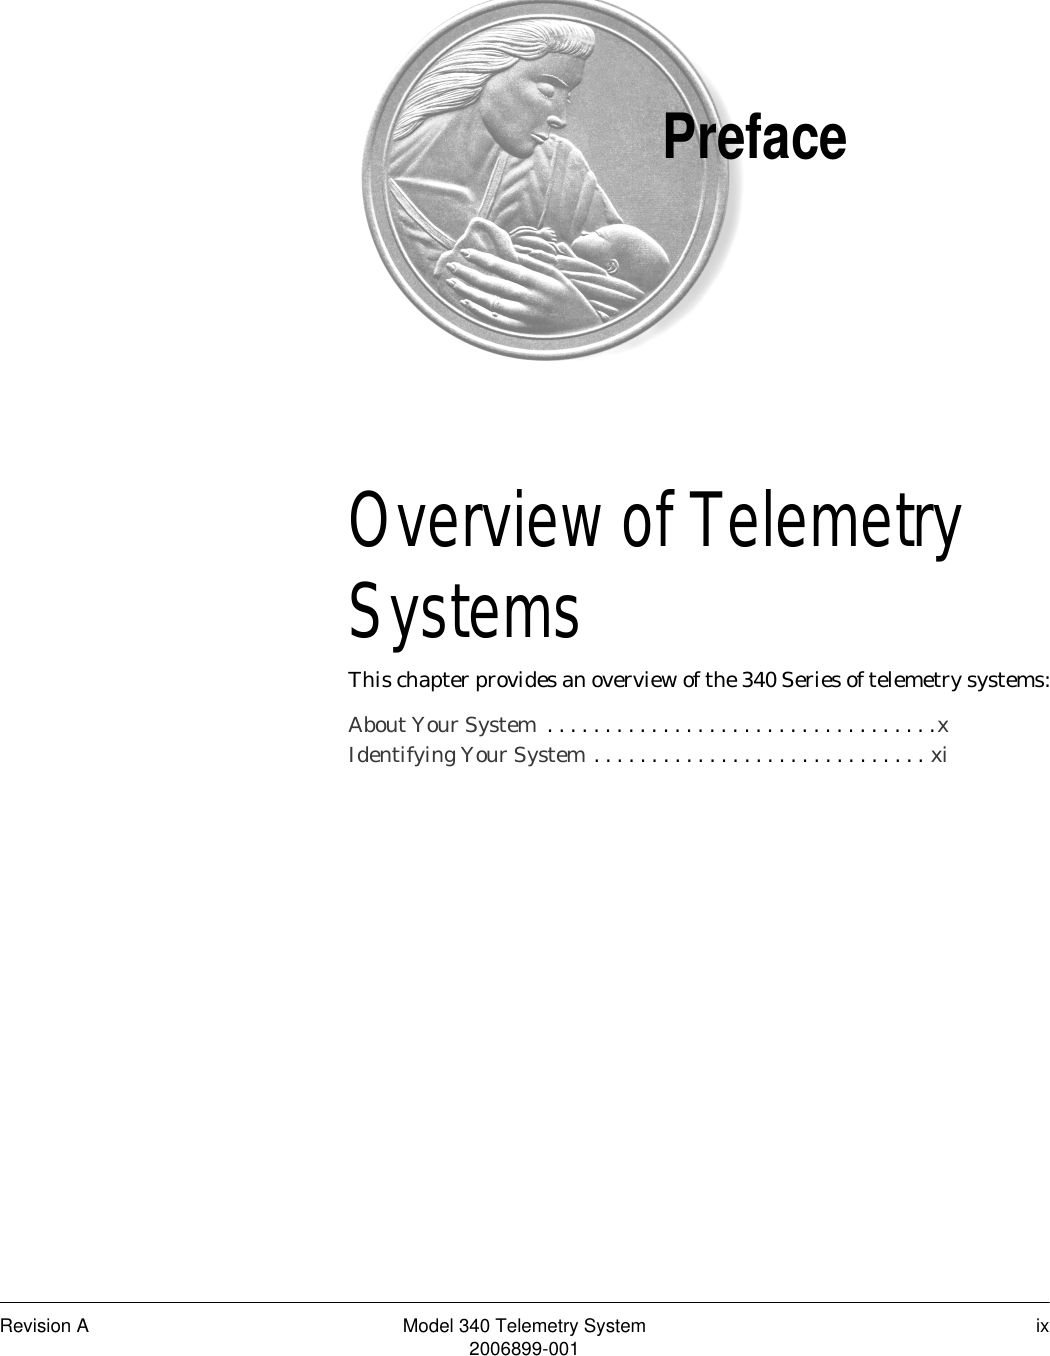 Revision A Model 340 Telemetry System ix2006899-001PrefaceOverview of Telemetry Systems PrefaceThis chapter provides an overview of the 340 Series of telemetry systems:About Your System  . . . . . . . . . . . . . . . . . . . . . . . . . . . . . . . . . .xIdentifying Your System . . . . . . . . . . . . . . . . . . . . . . . . . . . . . xi